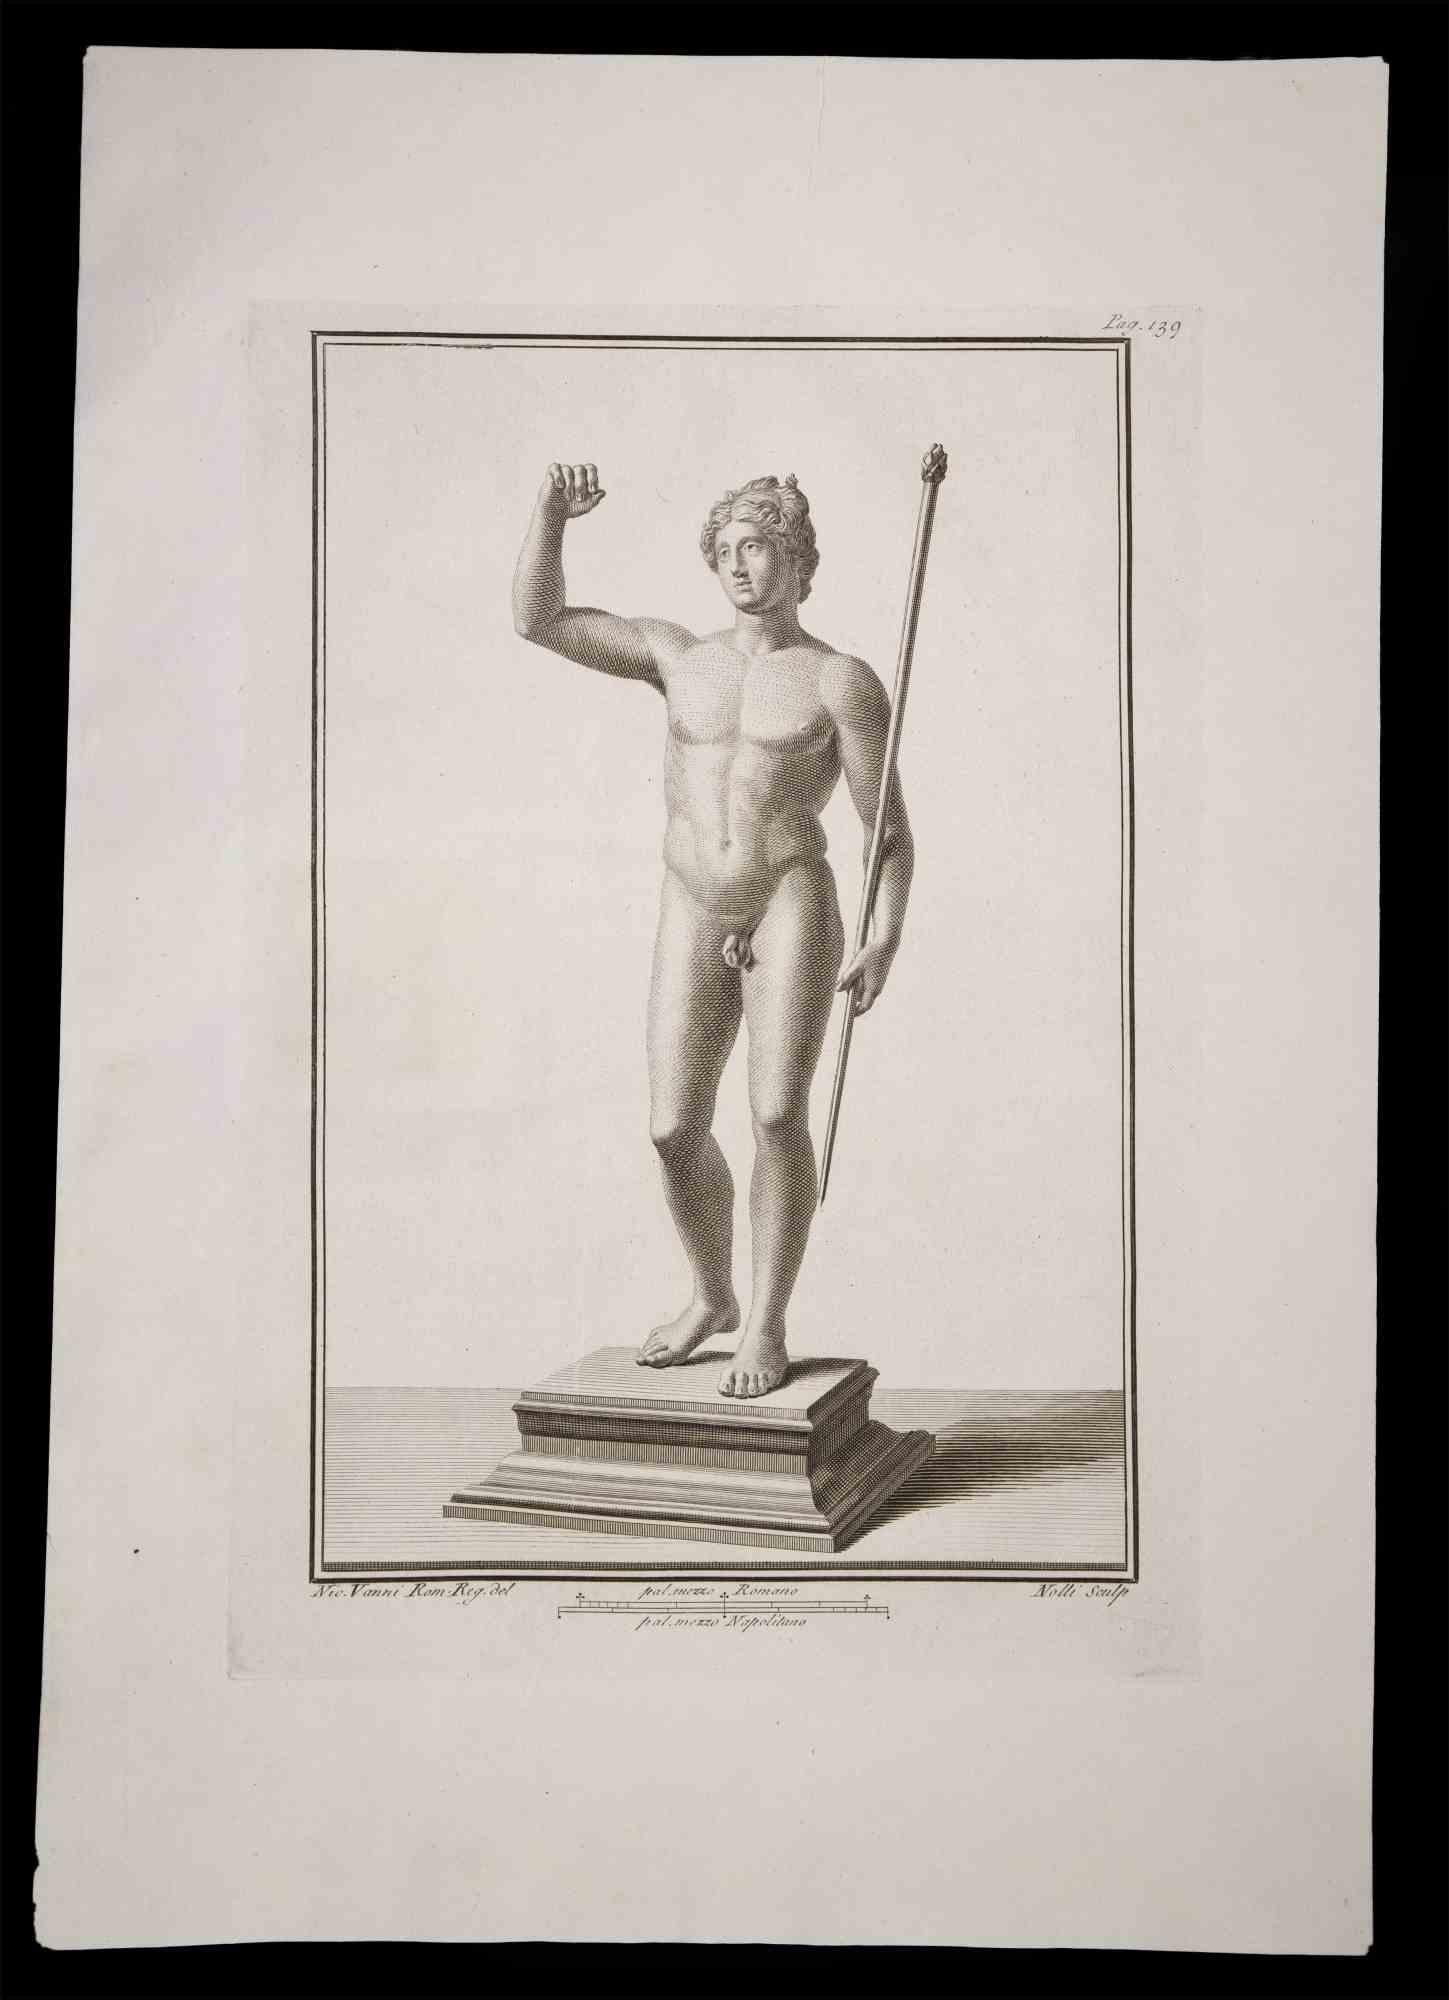 Carlo Nolli Figurative Print - Ancient Roman Statue - Etching by C. Nolli - 18th century